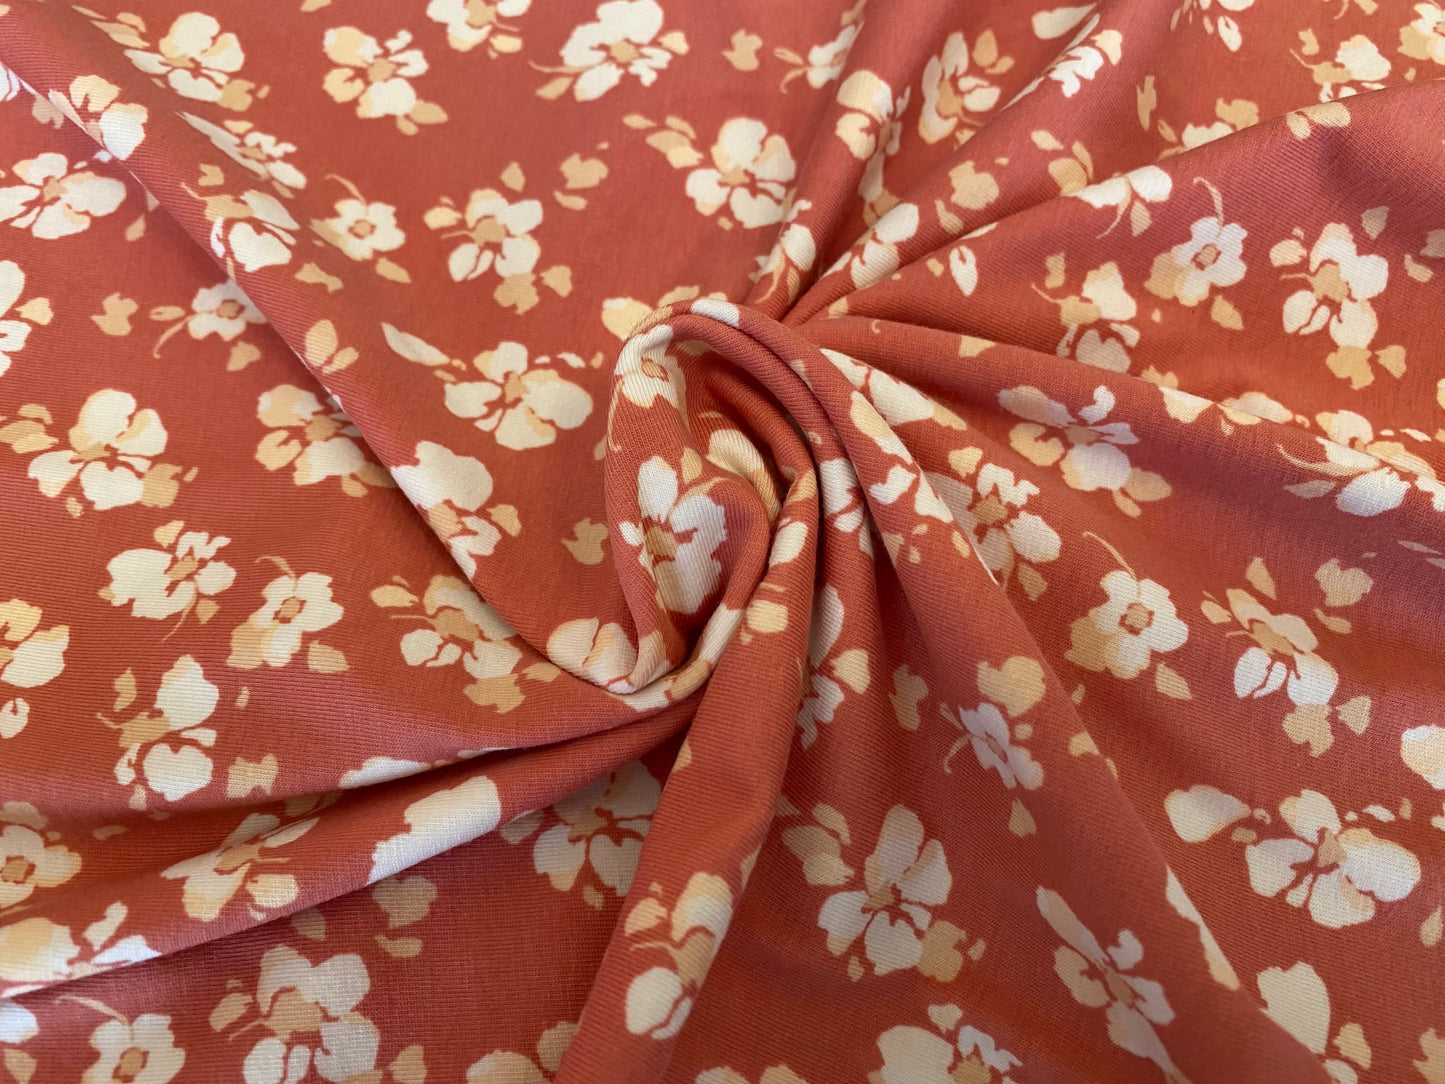 95/5 Cotton/Spandex Jersey - Red Desert Blooms